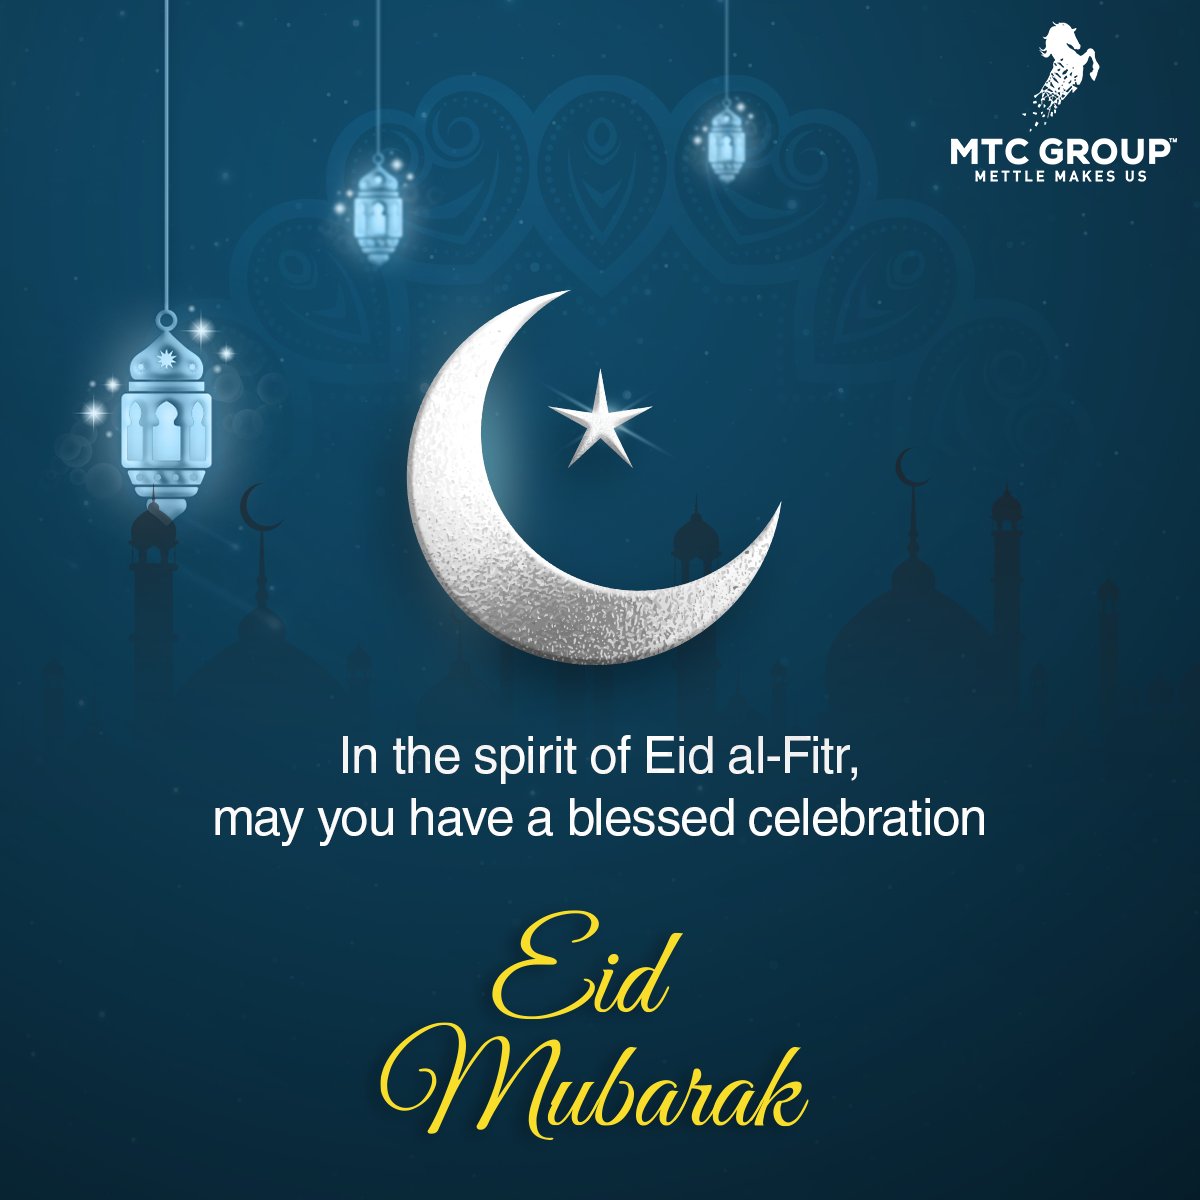 MTC Group sending you warm wishes on Eid-ul-Fitr, may this day bring peace and prosperity to your life. #MTCGroup #EidMubarak #BlessingsOfEid #PeaceAndJoy #EidCelebration #FestiveSpirit #EidGreetings #BlessedEid #JoyfulMoments #EidWishes #EidAlFitr